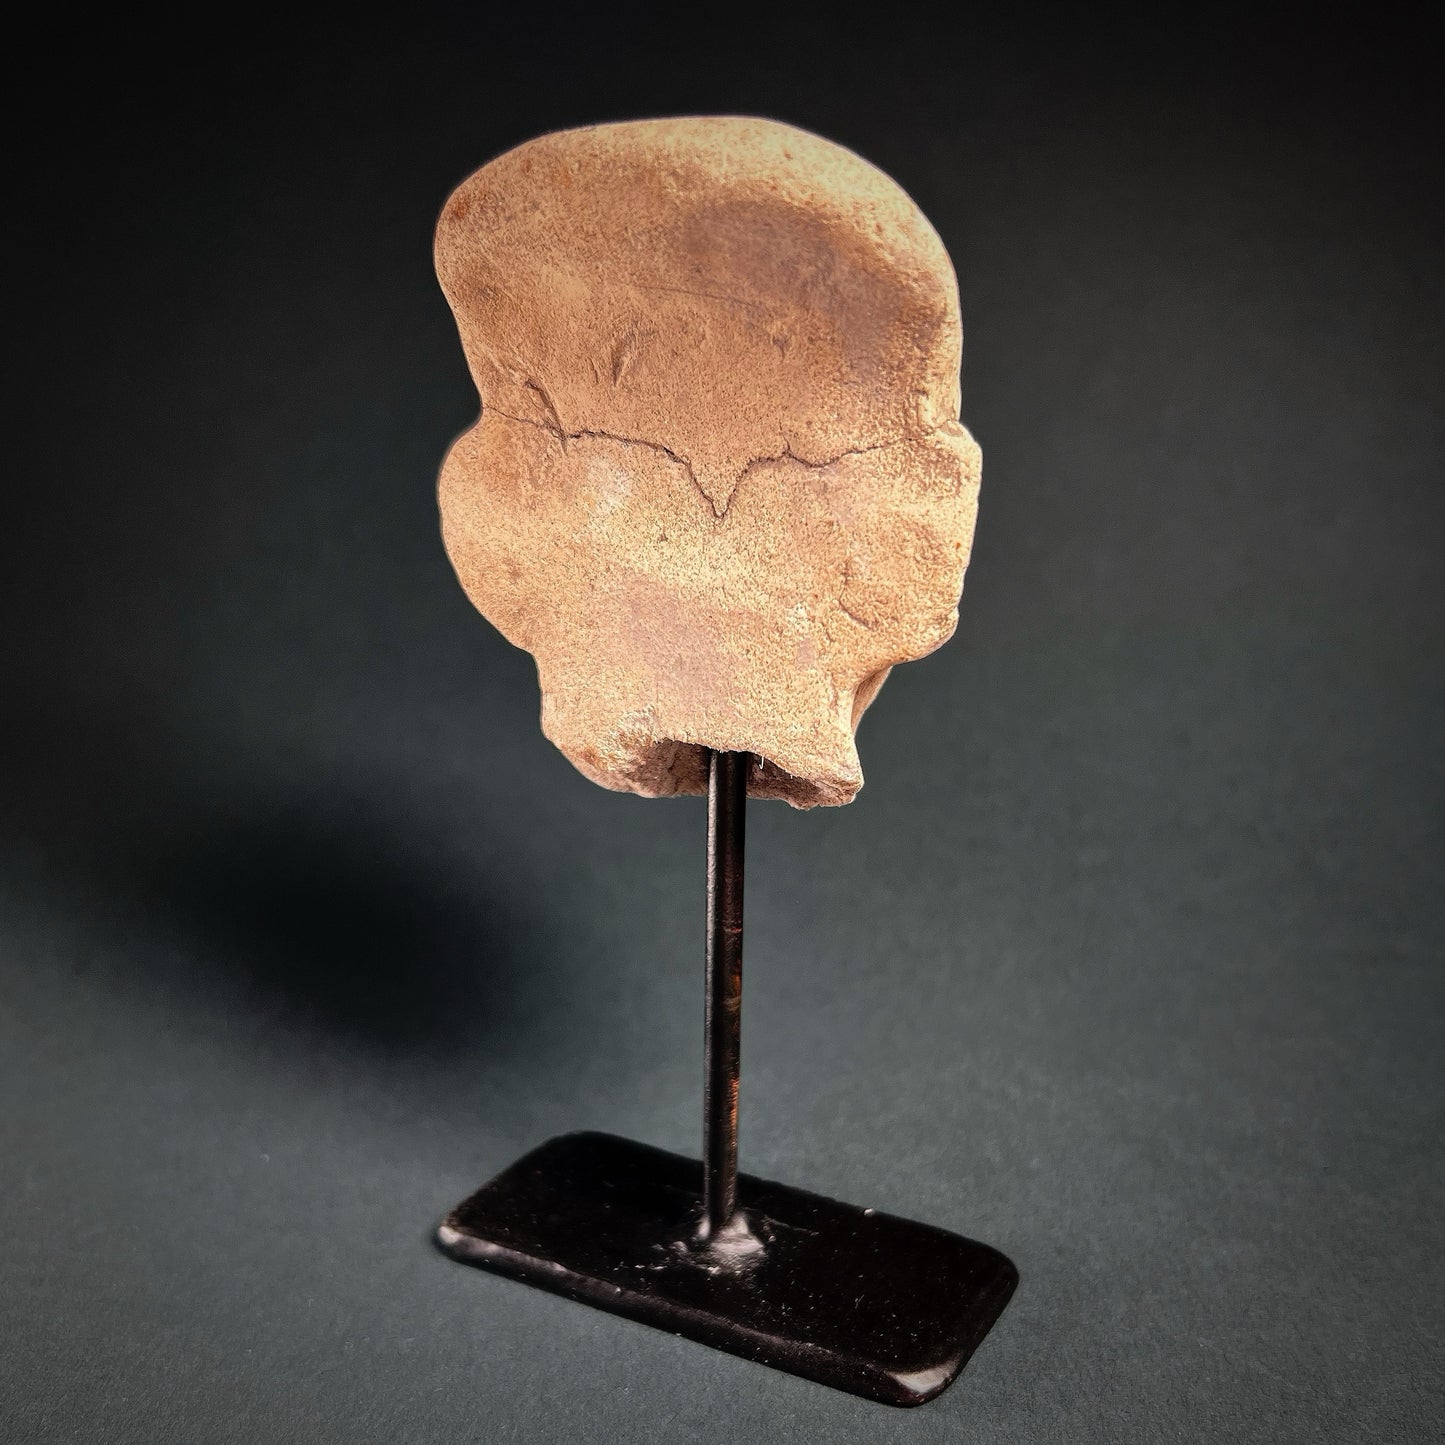 La Tolita-Tumaco Grey Ware Head Fragment